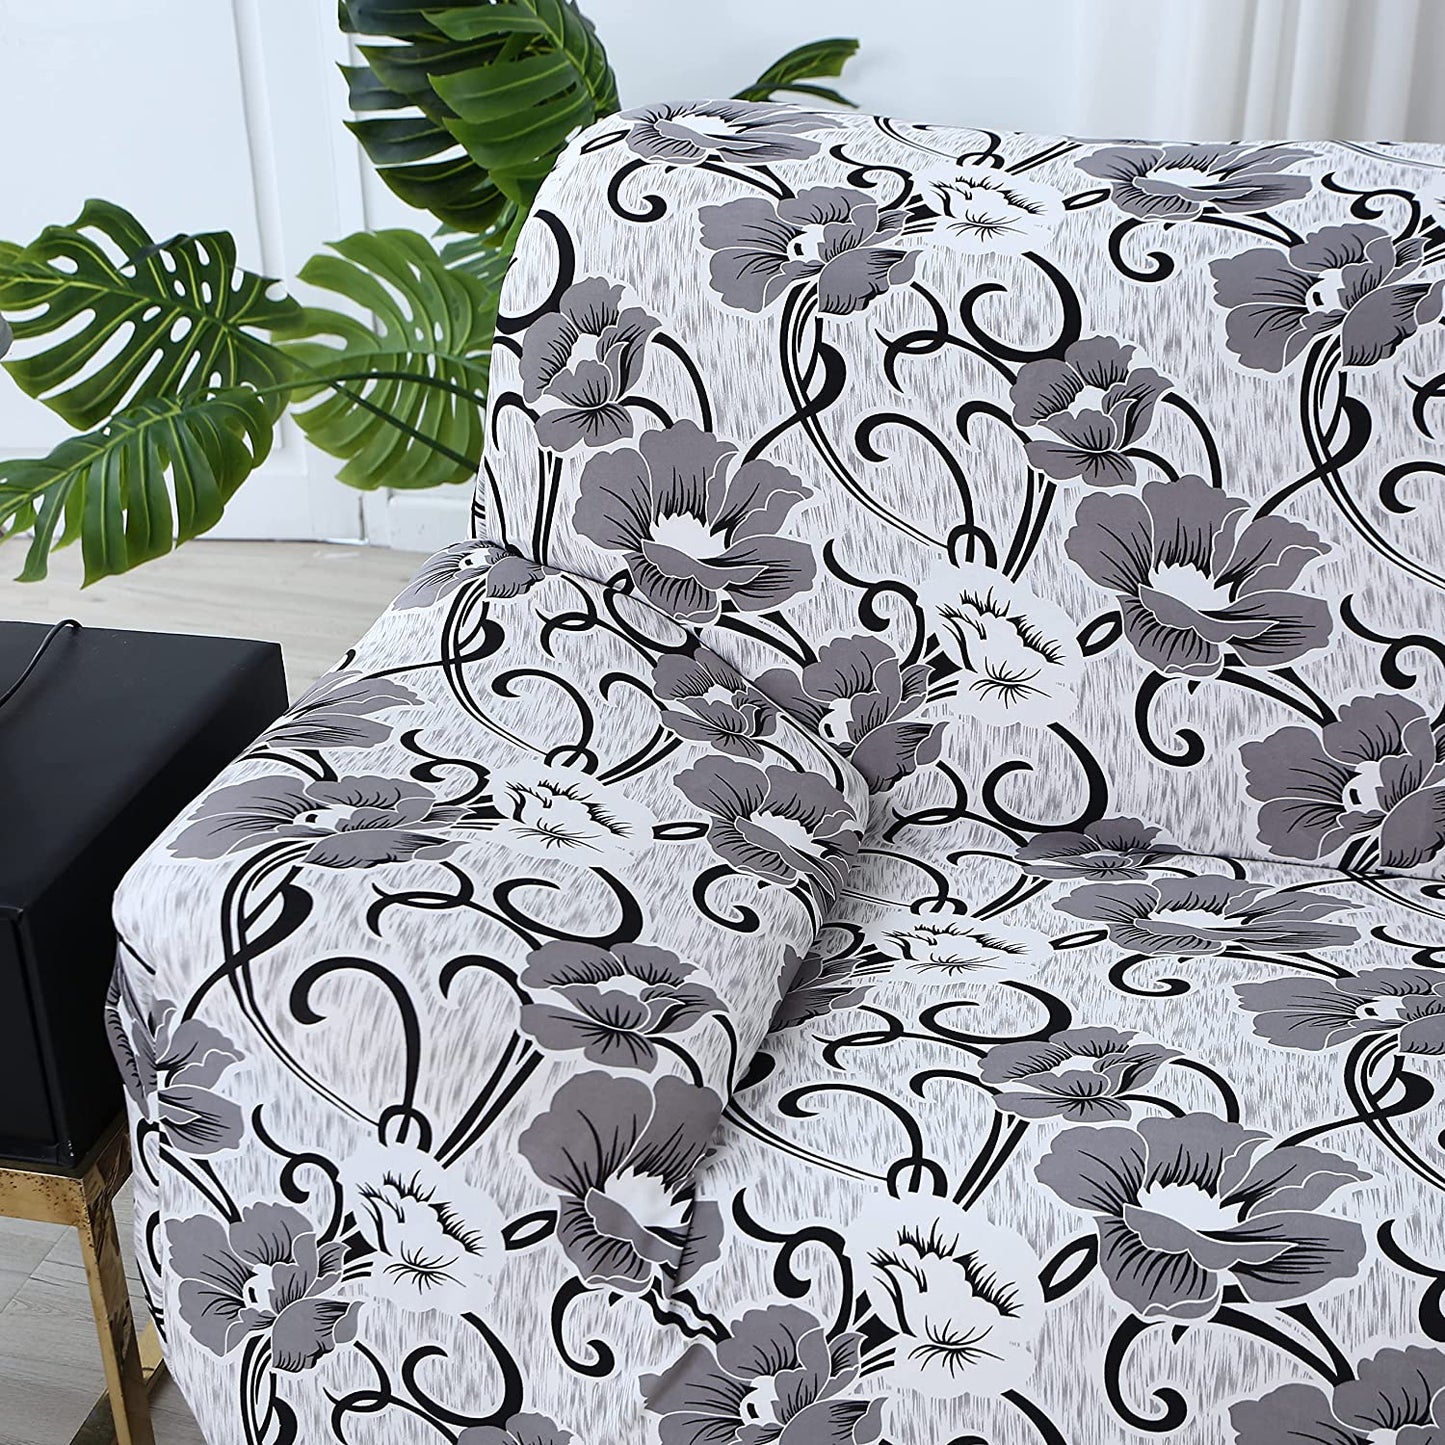 Universal Sofa Slipcover (White Grey Flower)